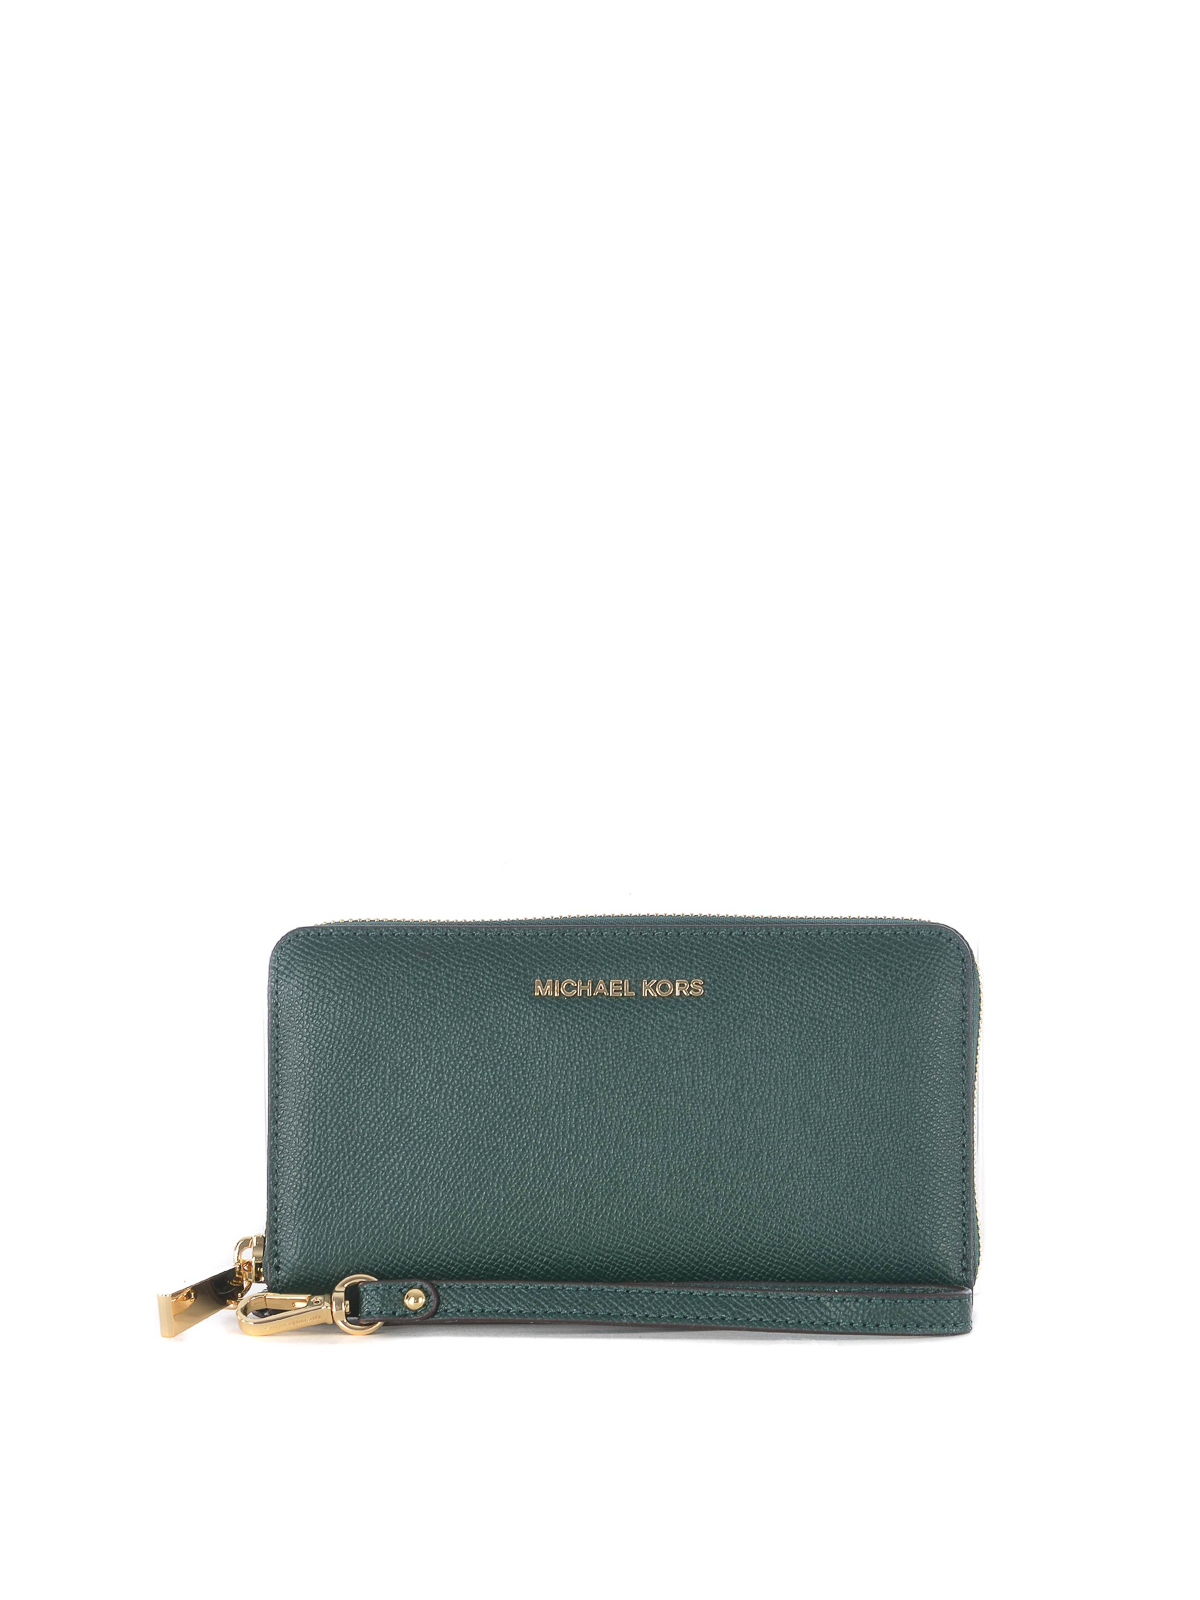 Wallets & purses Michael Kors - Jet Set Travel dark green leather wallet -  32T4GTVE3L305